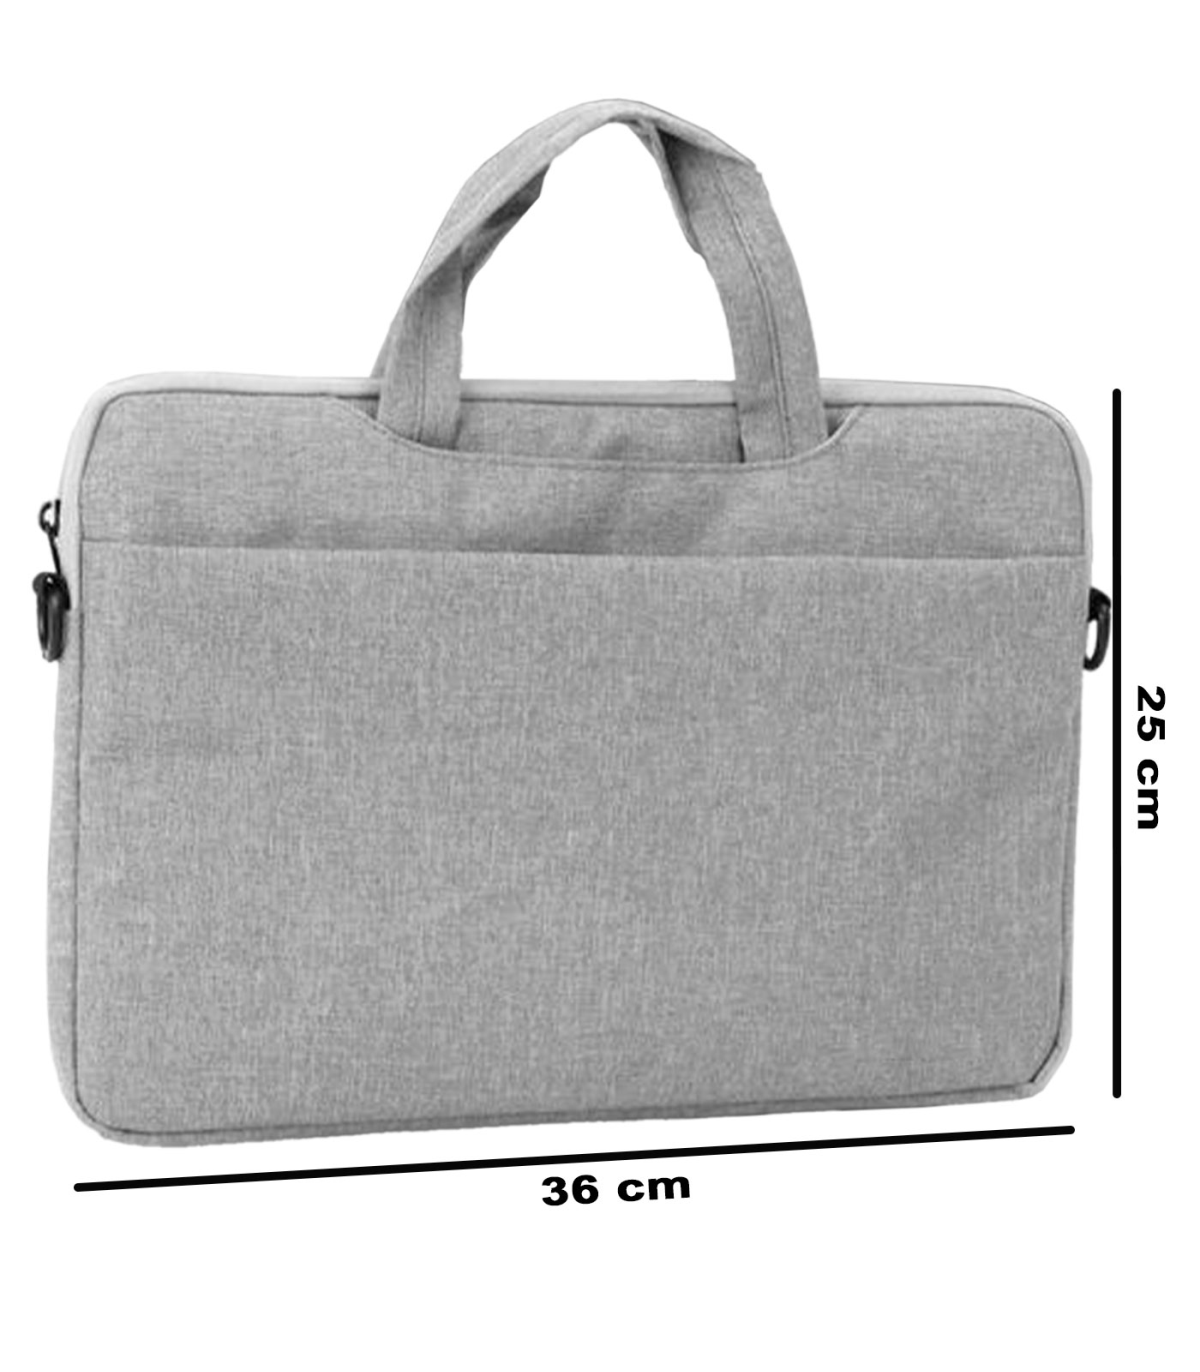 Tradineur - Bolsa para portátil de 11-12 pulgadas, bolso, maletín,  bandolera, funda de tela impermeable con asas y correa de hom